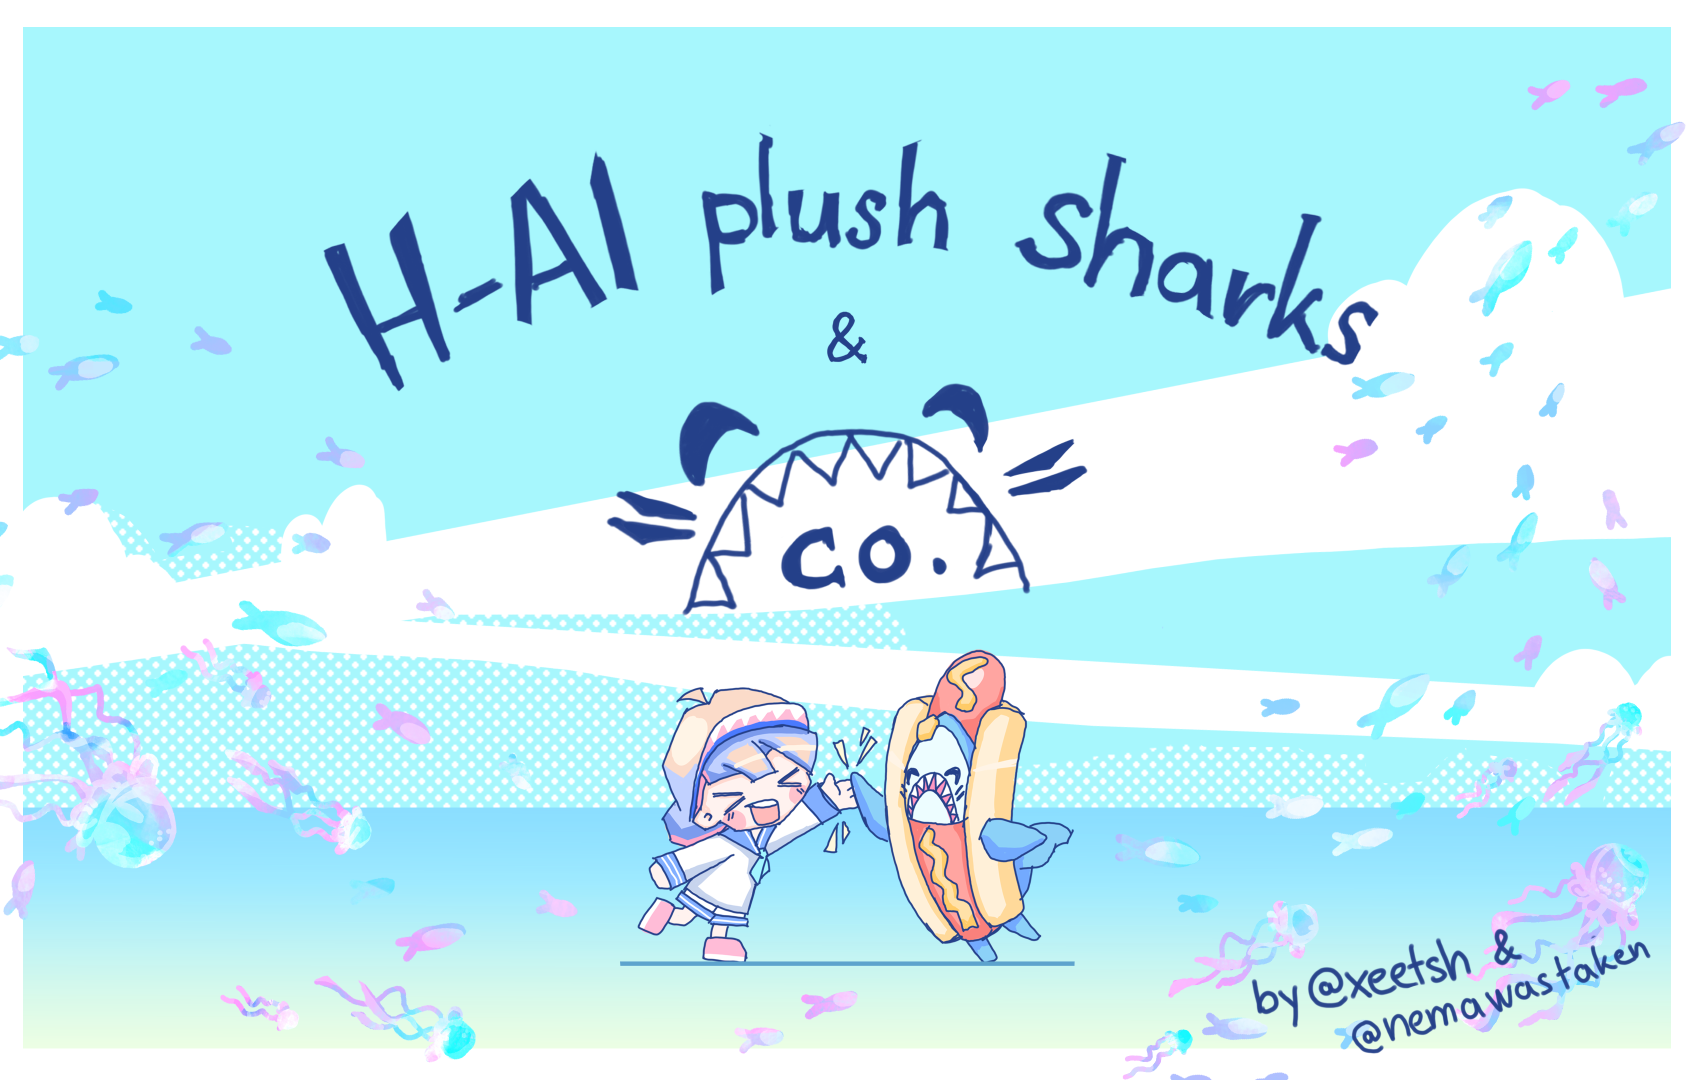 H-AI plush sharks & co.